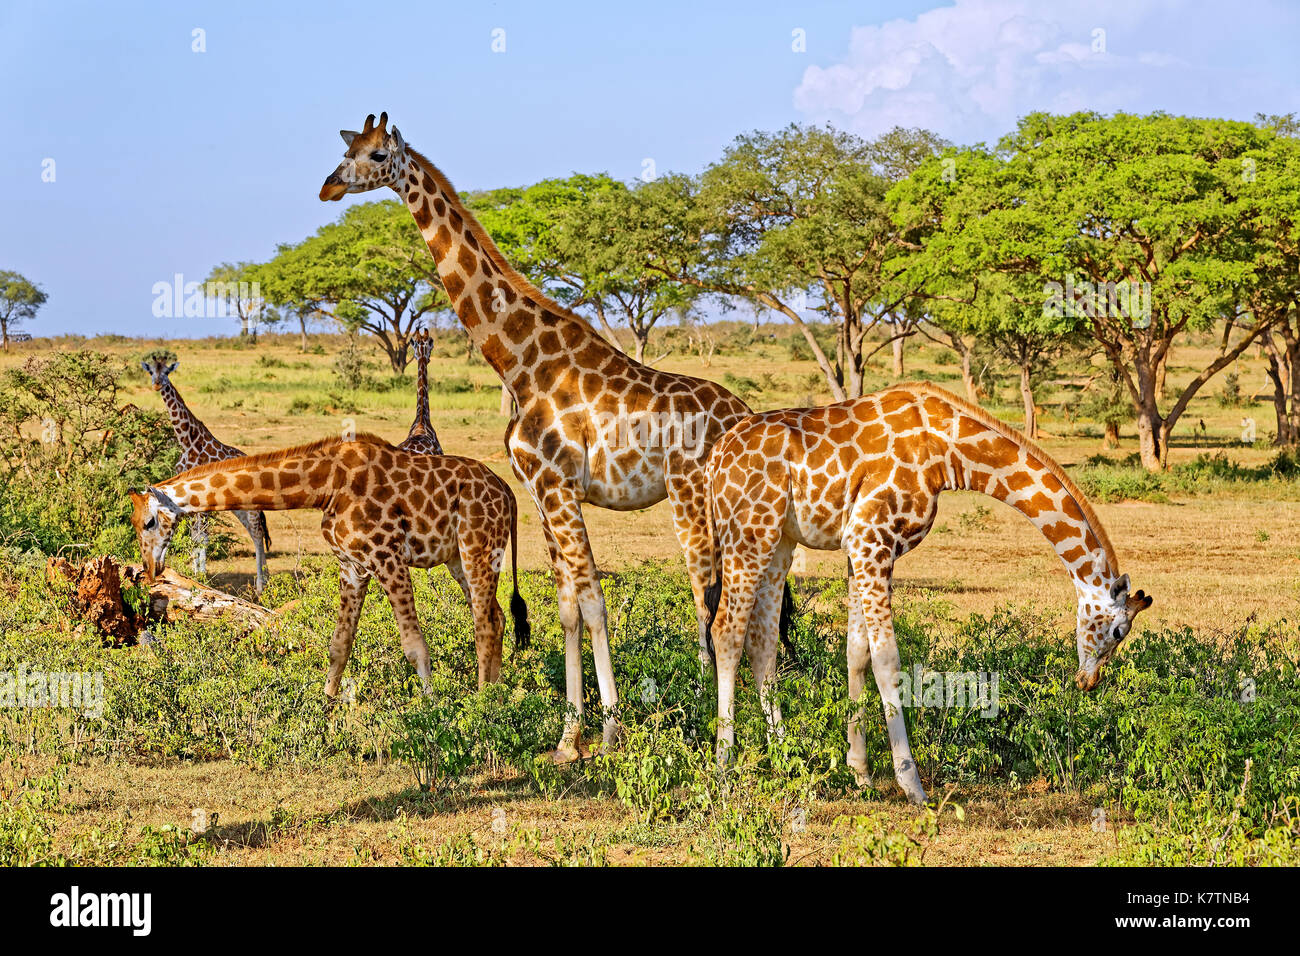 A small herd of giraffes feeding in natural habitat, Murchison Falls National Park, Uganda, Africa. Stock Photo